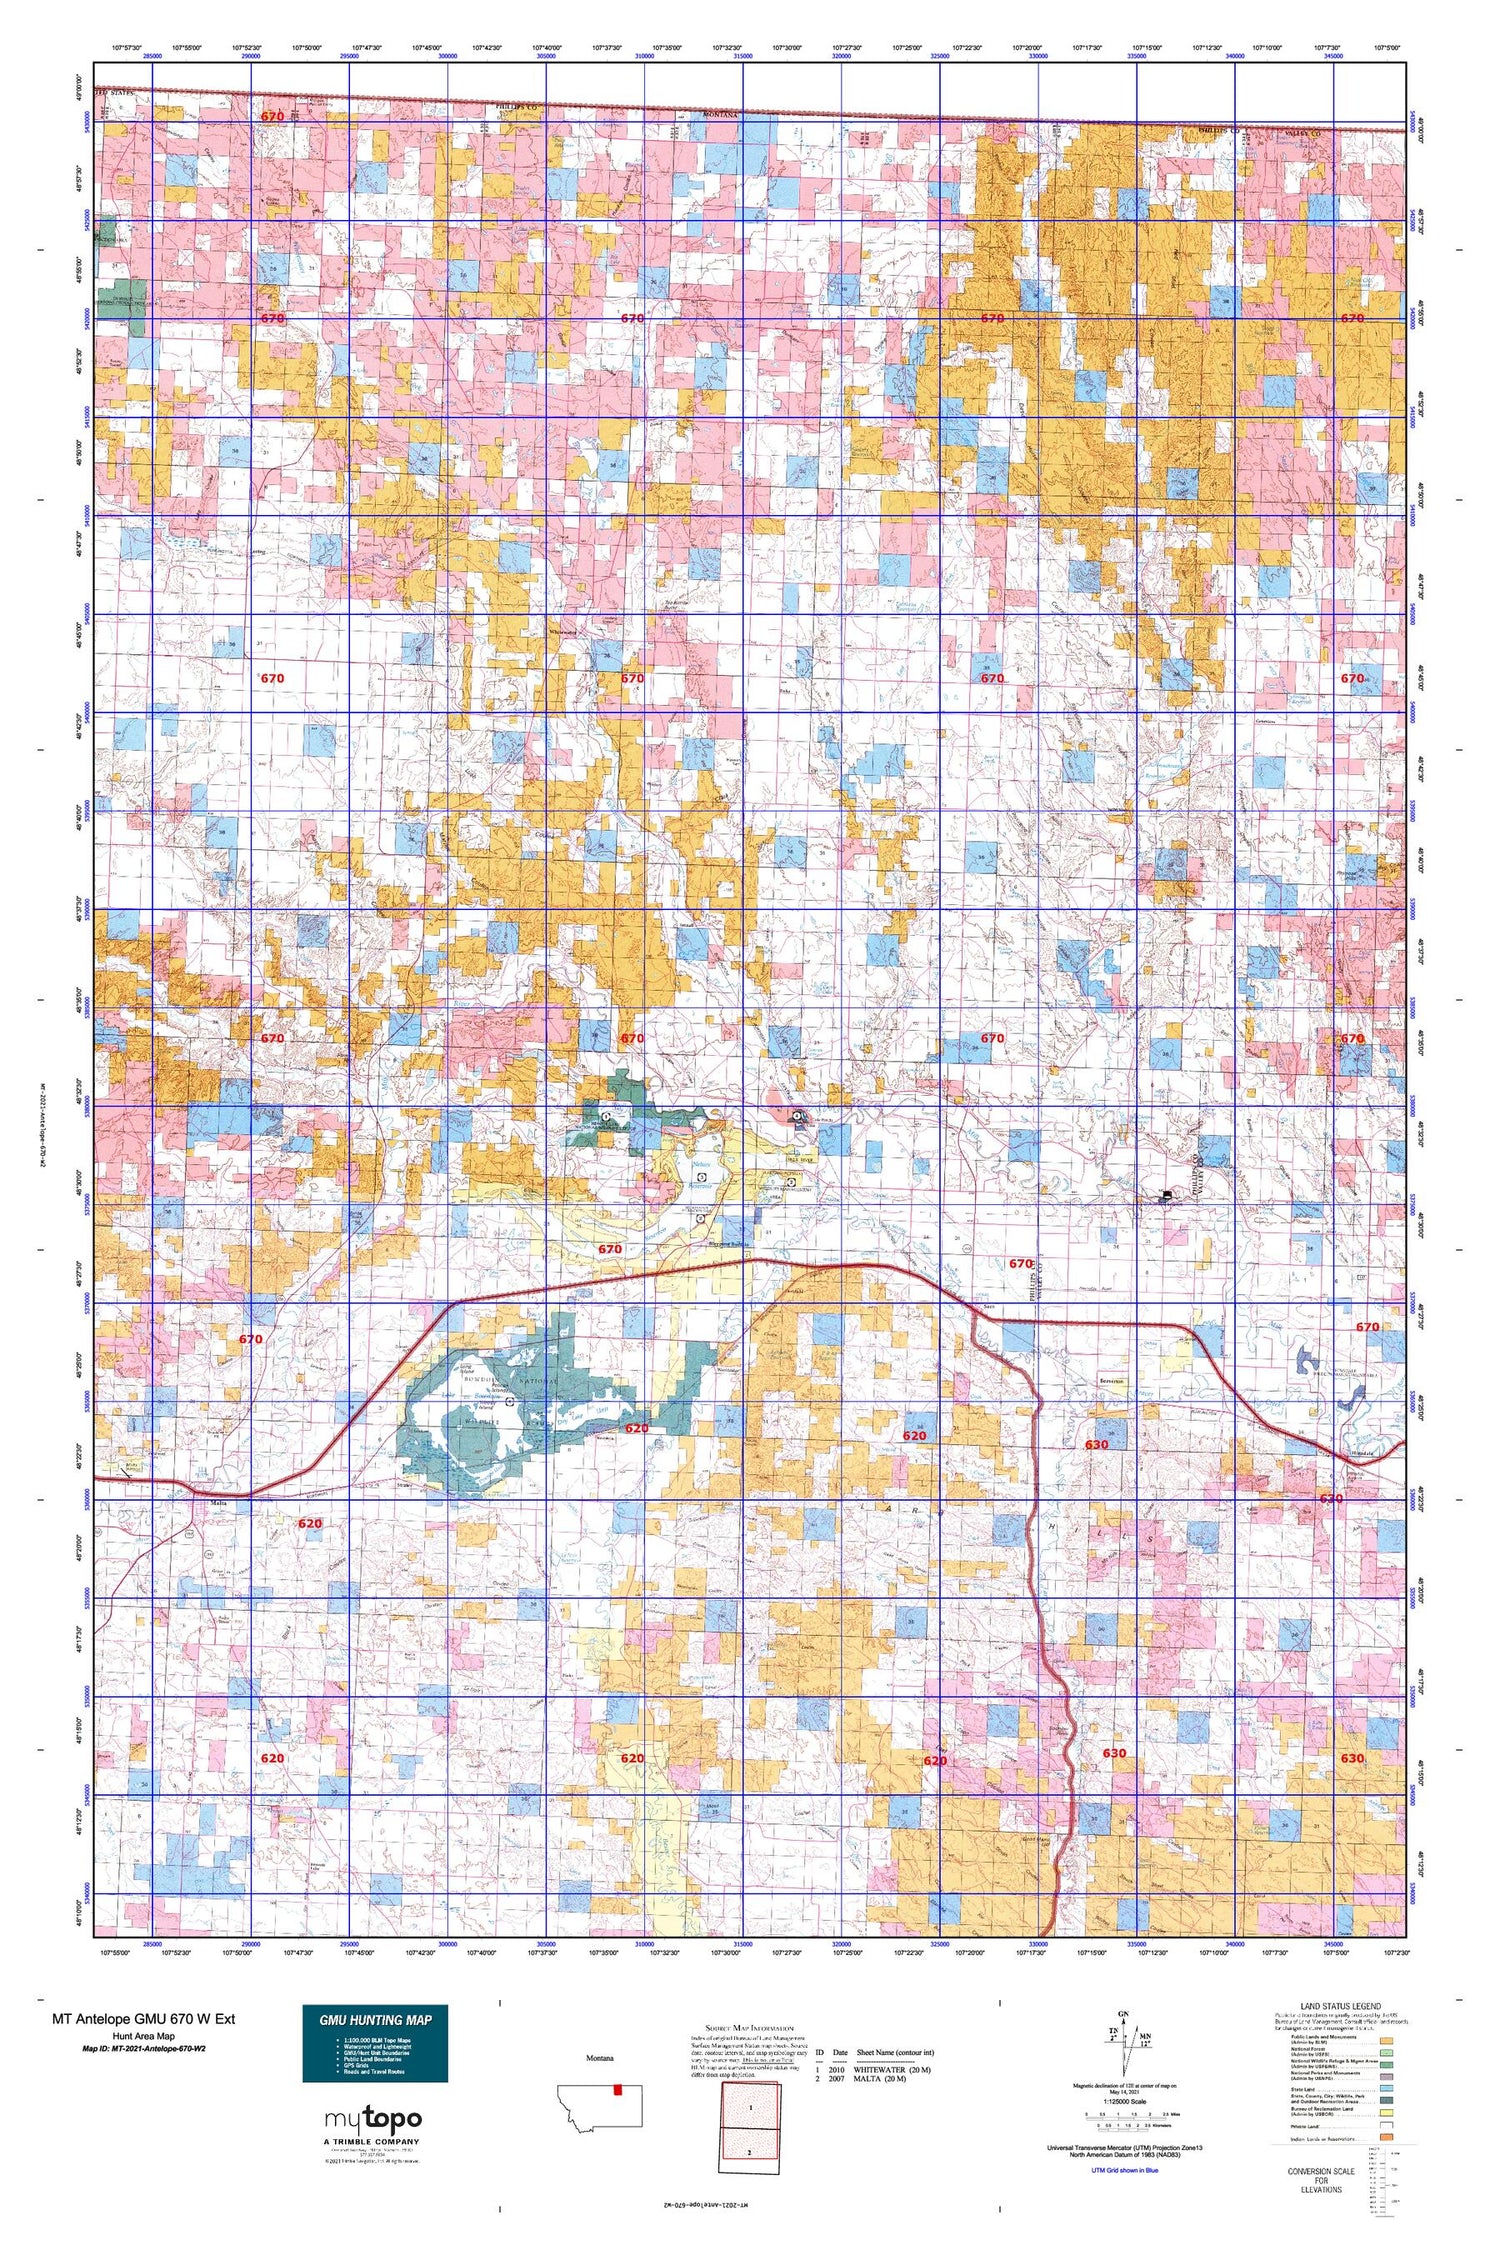 Montana Antelope GMU 670 W Ext Map Image